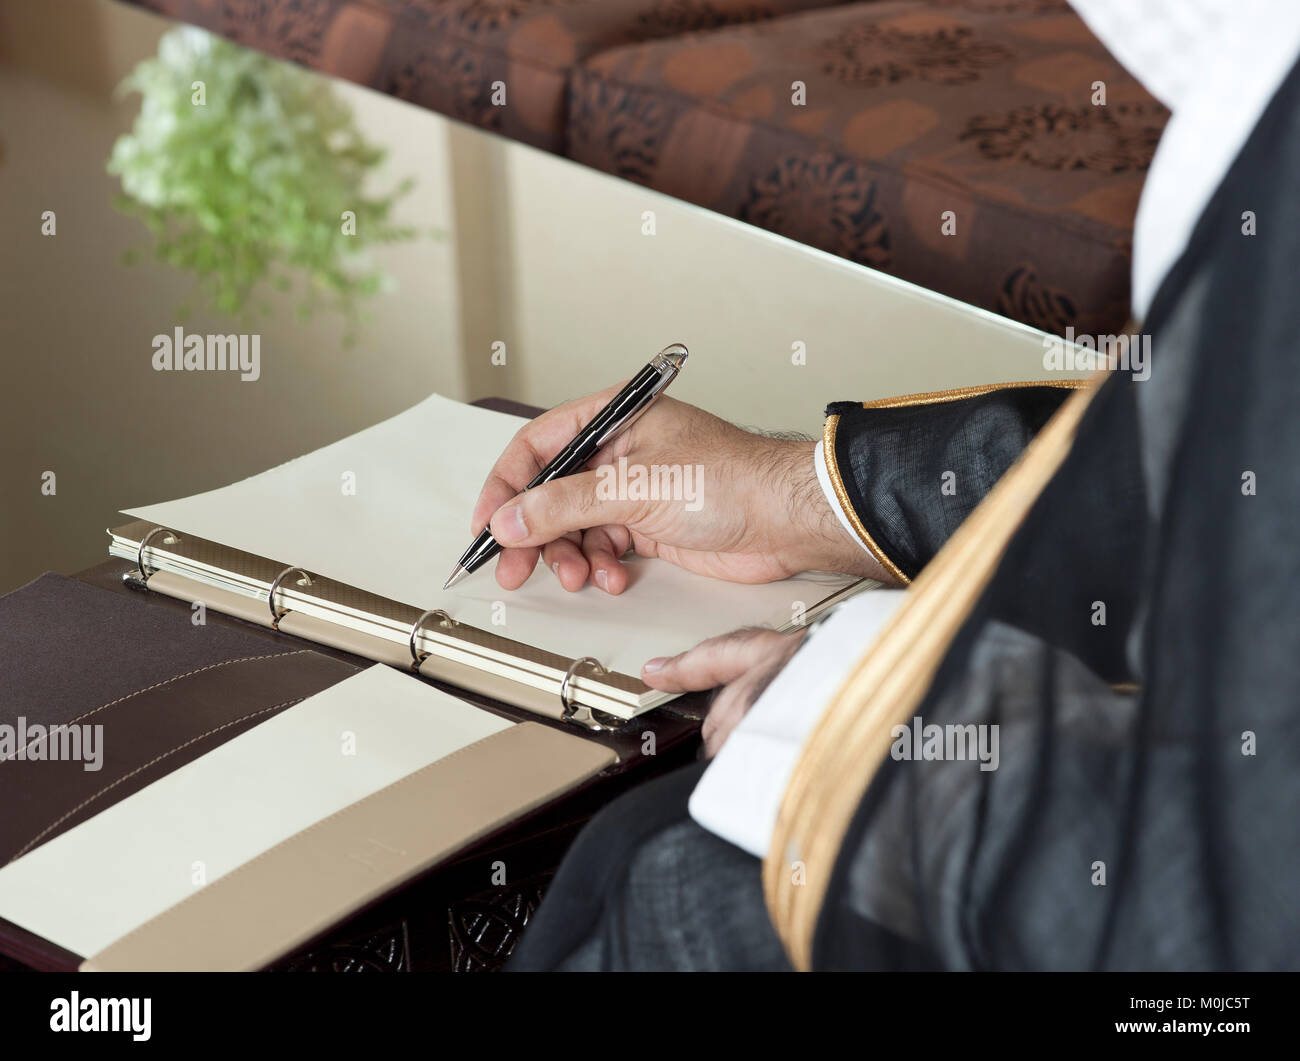 Saudi Arabian Man Hand Writing on A Notebook in a Luxury Home Environment, wearing Saudi Thob, Ghutra and Black Bisht Stock Photo